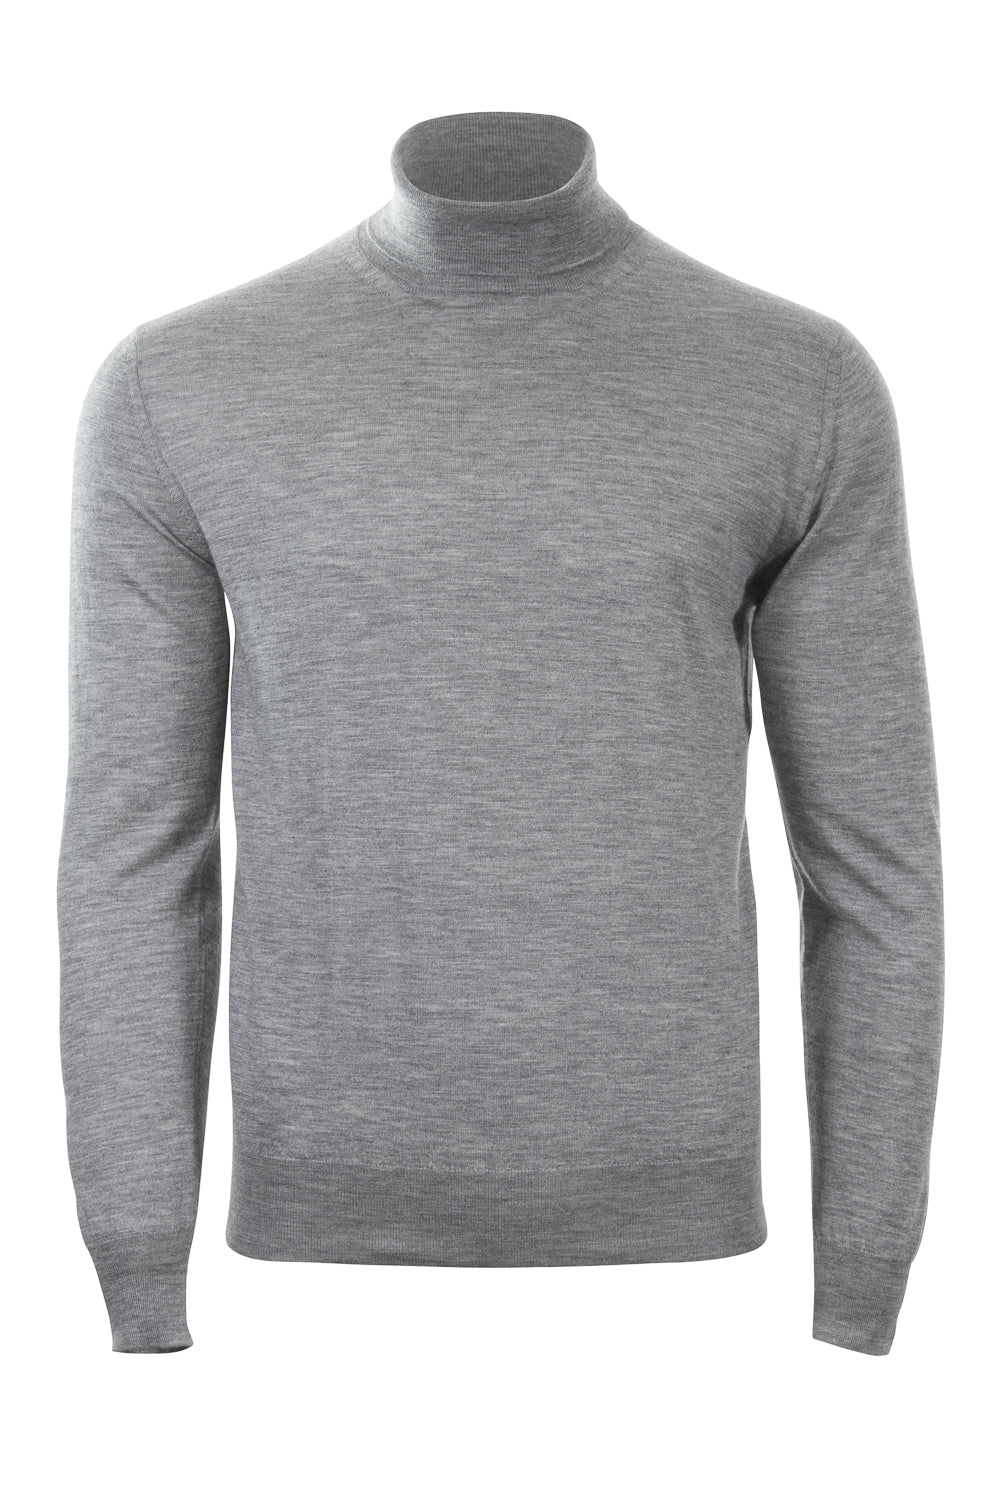 Plain turtleneck sweater